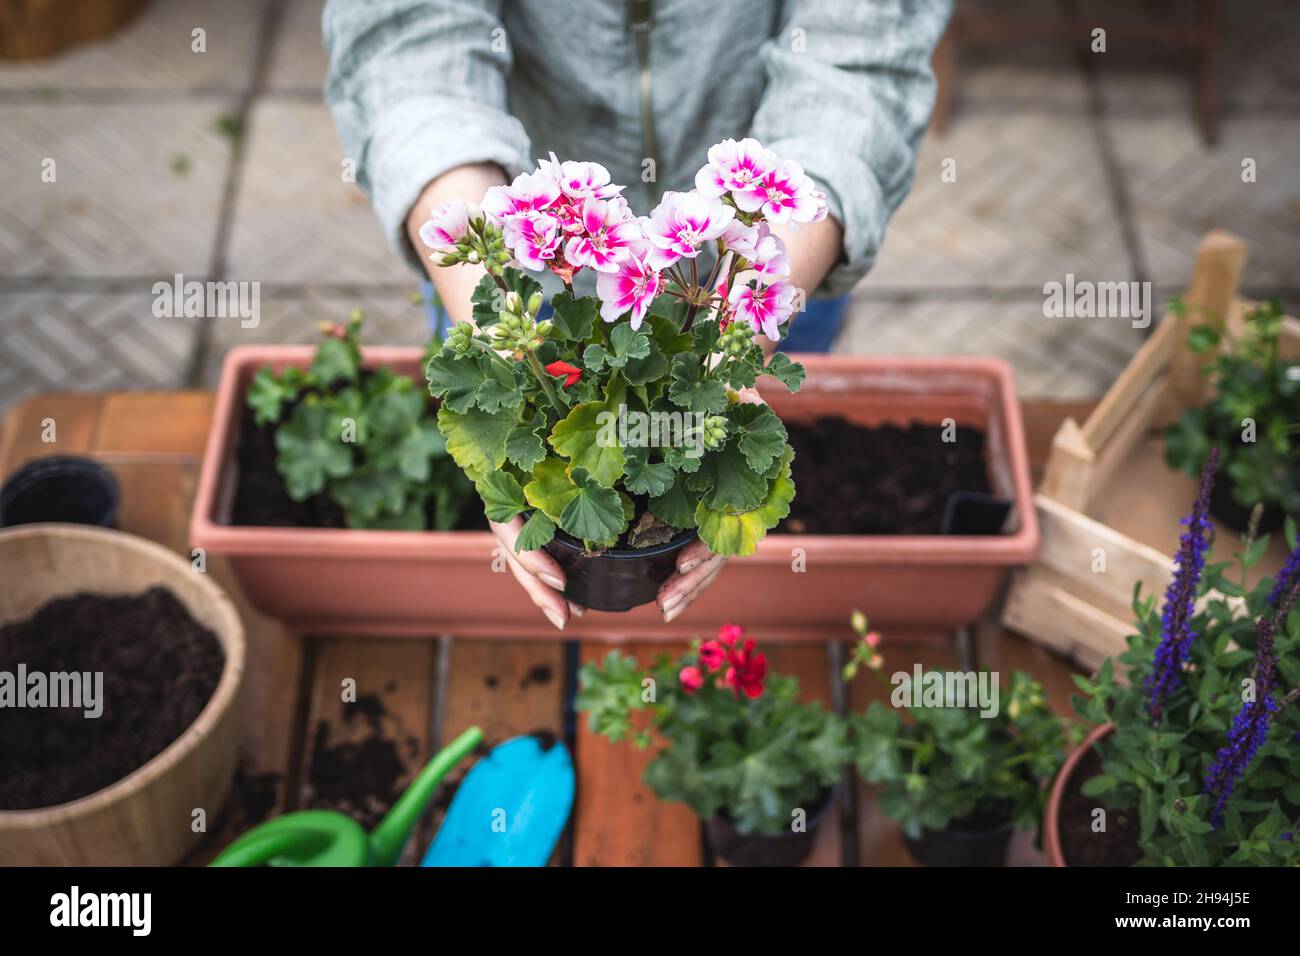 Planting geranium seedling on table. Woman holding pink pelargonium flower in hands. Gardening at springtime Stock Photo